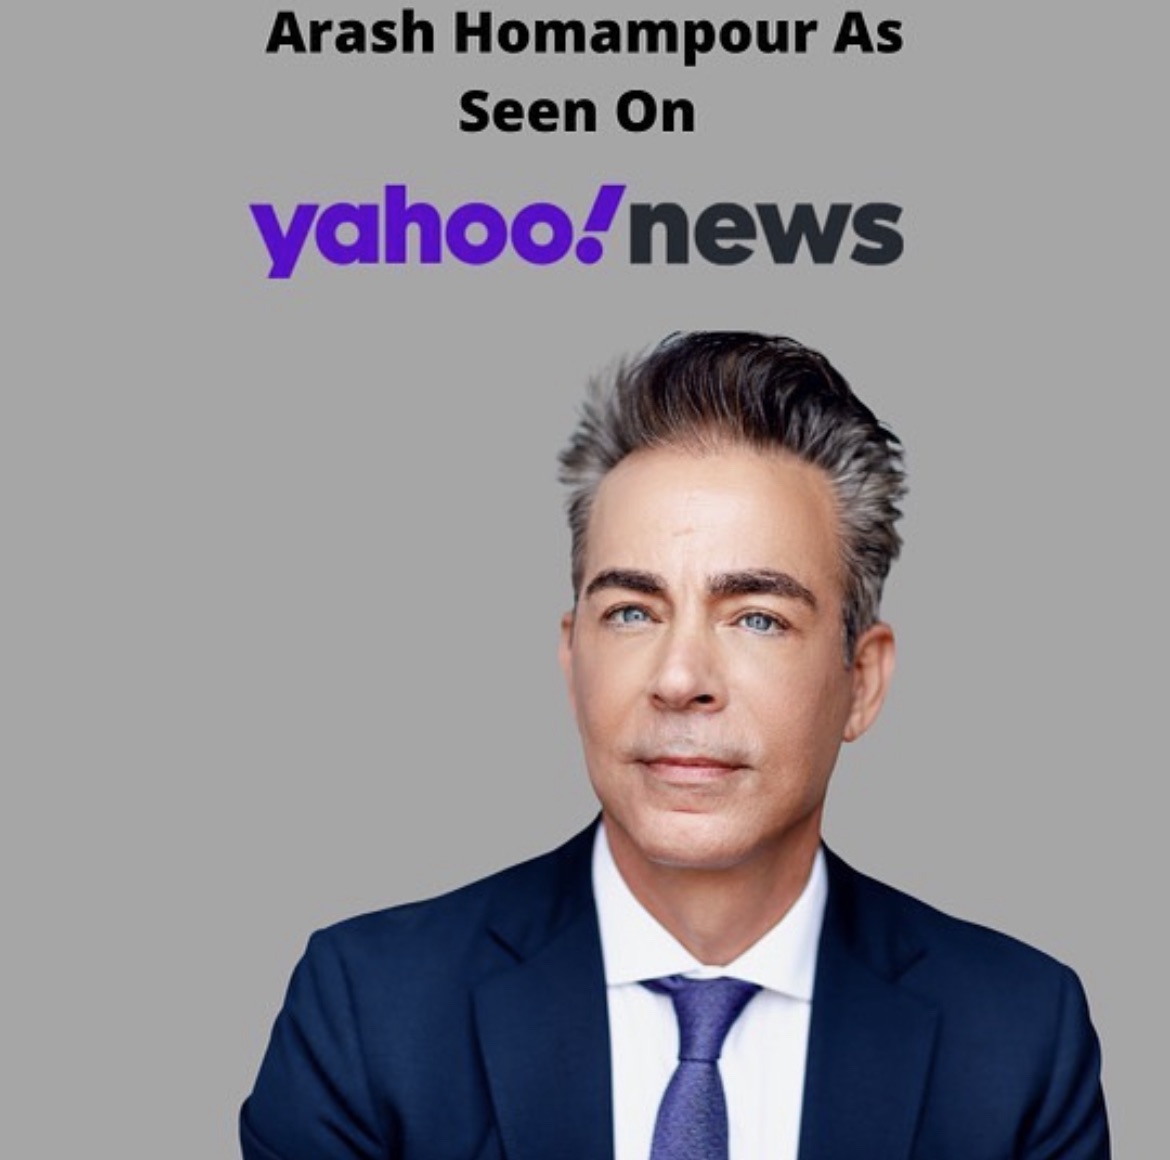 Arash Homampour headshot with text, "Arash Homampour As See On Yahoo! News